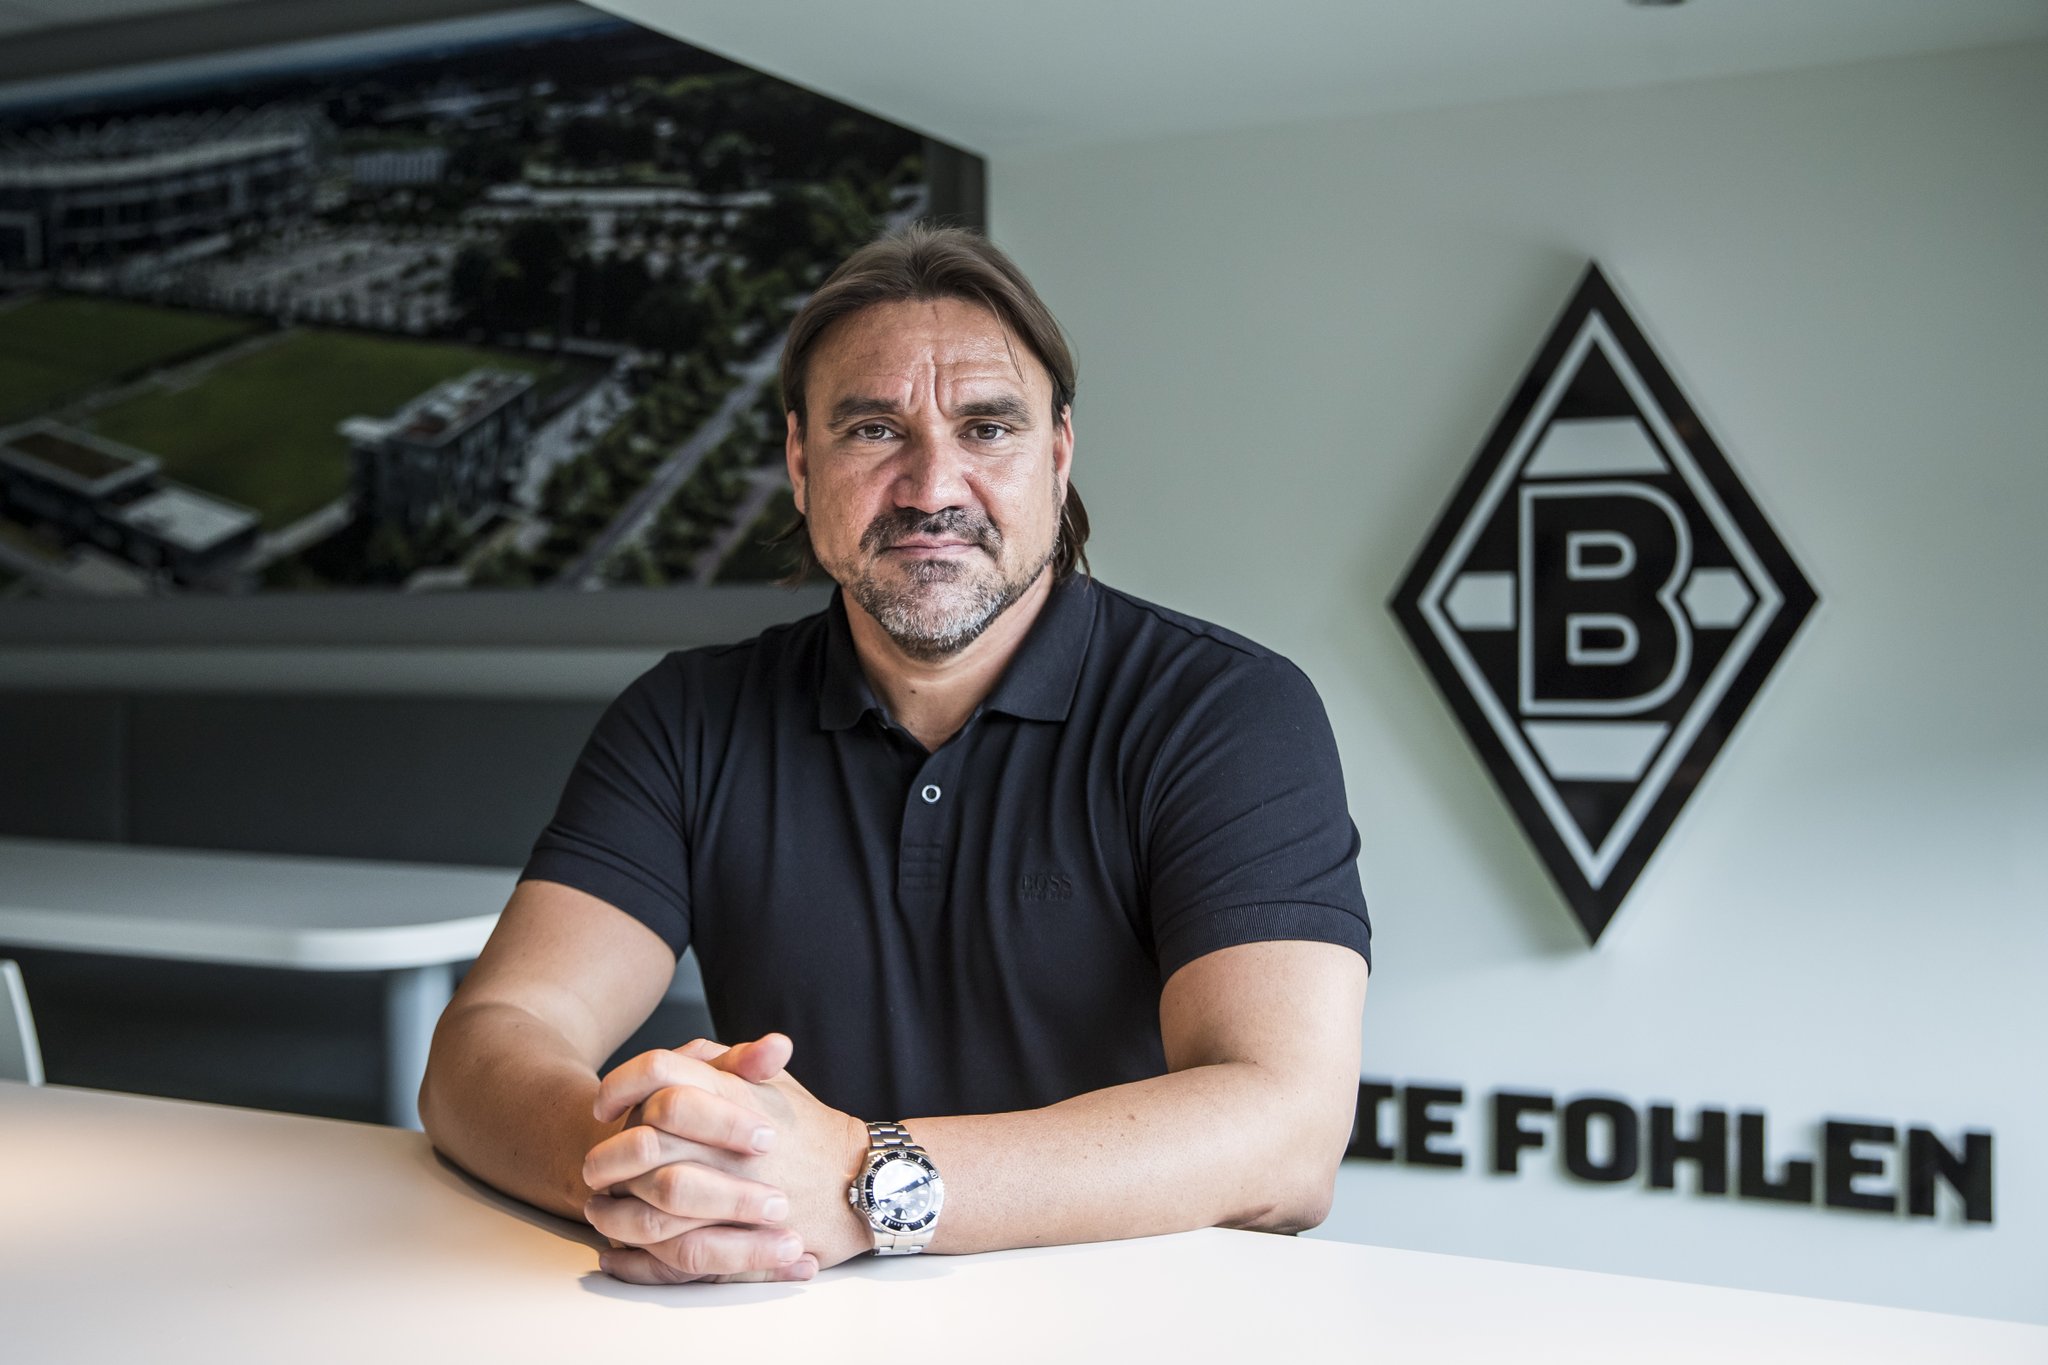 Daniel Farke Unveiled As the New Borussia Monchengladbach Manager